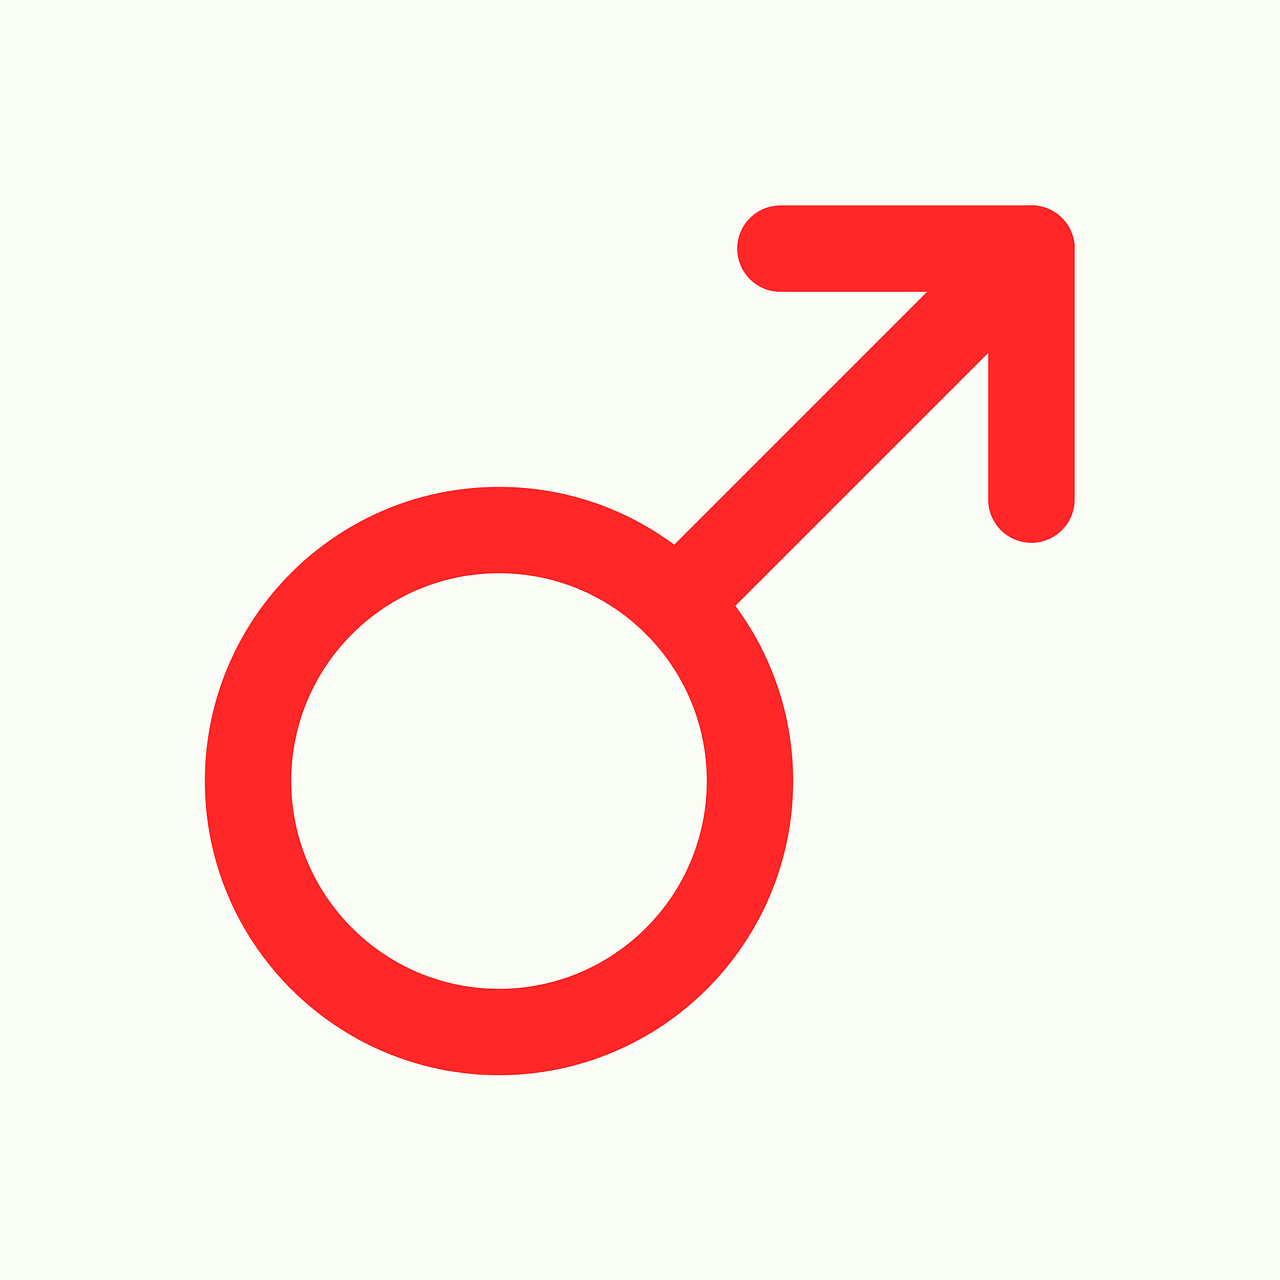 Мужской символ. Знак мужского пола. Мужской пол символ. Значок гендера мужской. Symbol icon